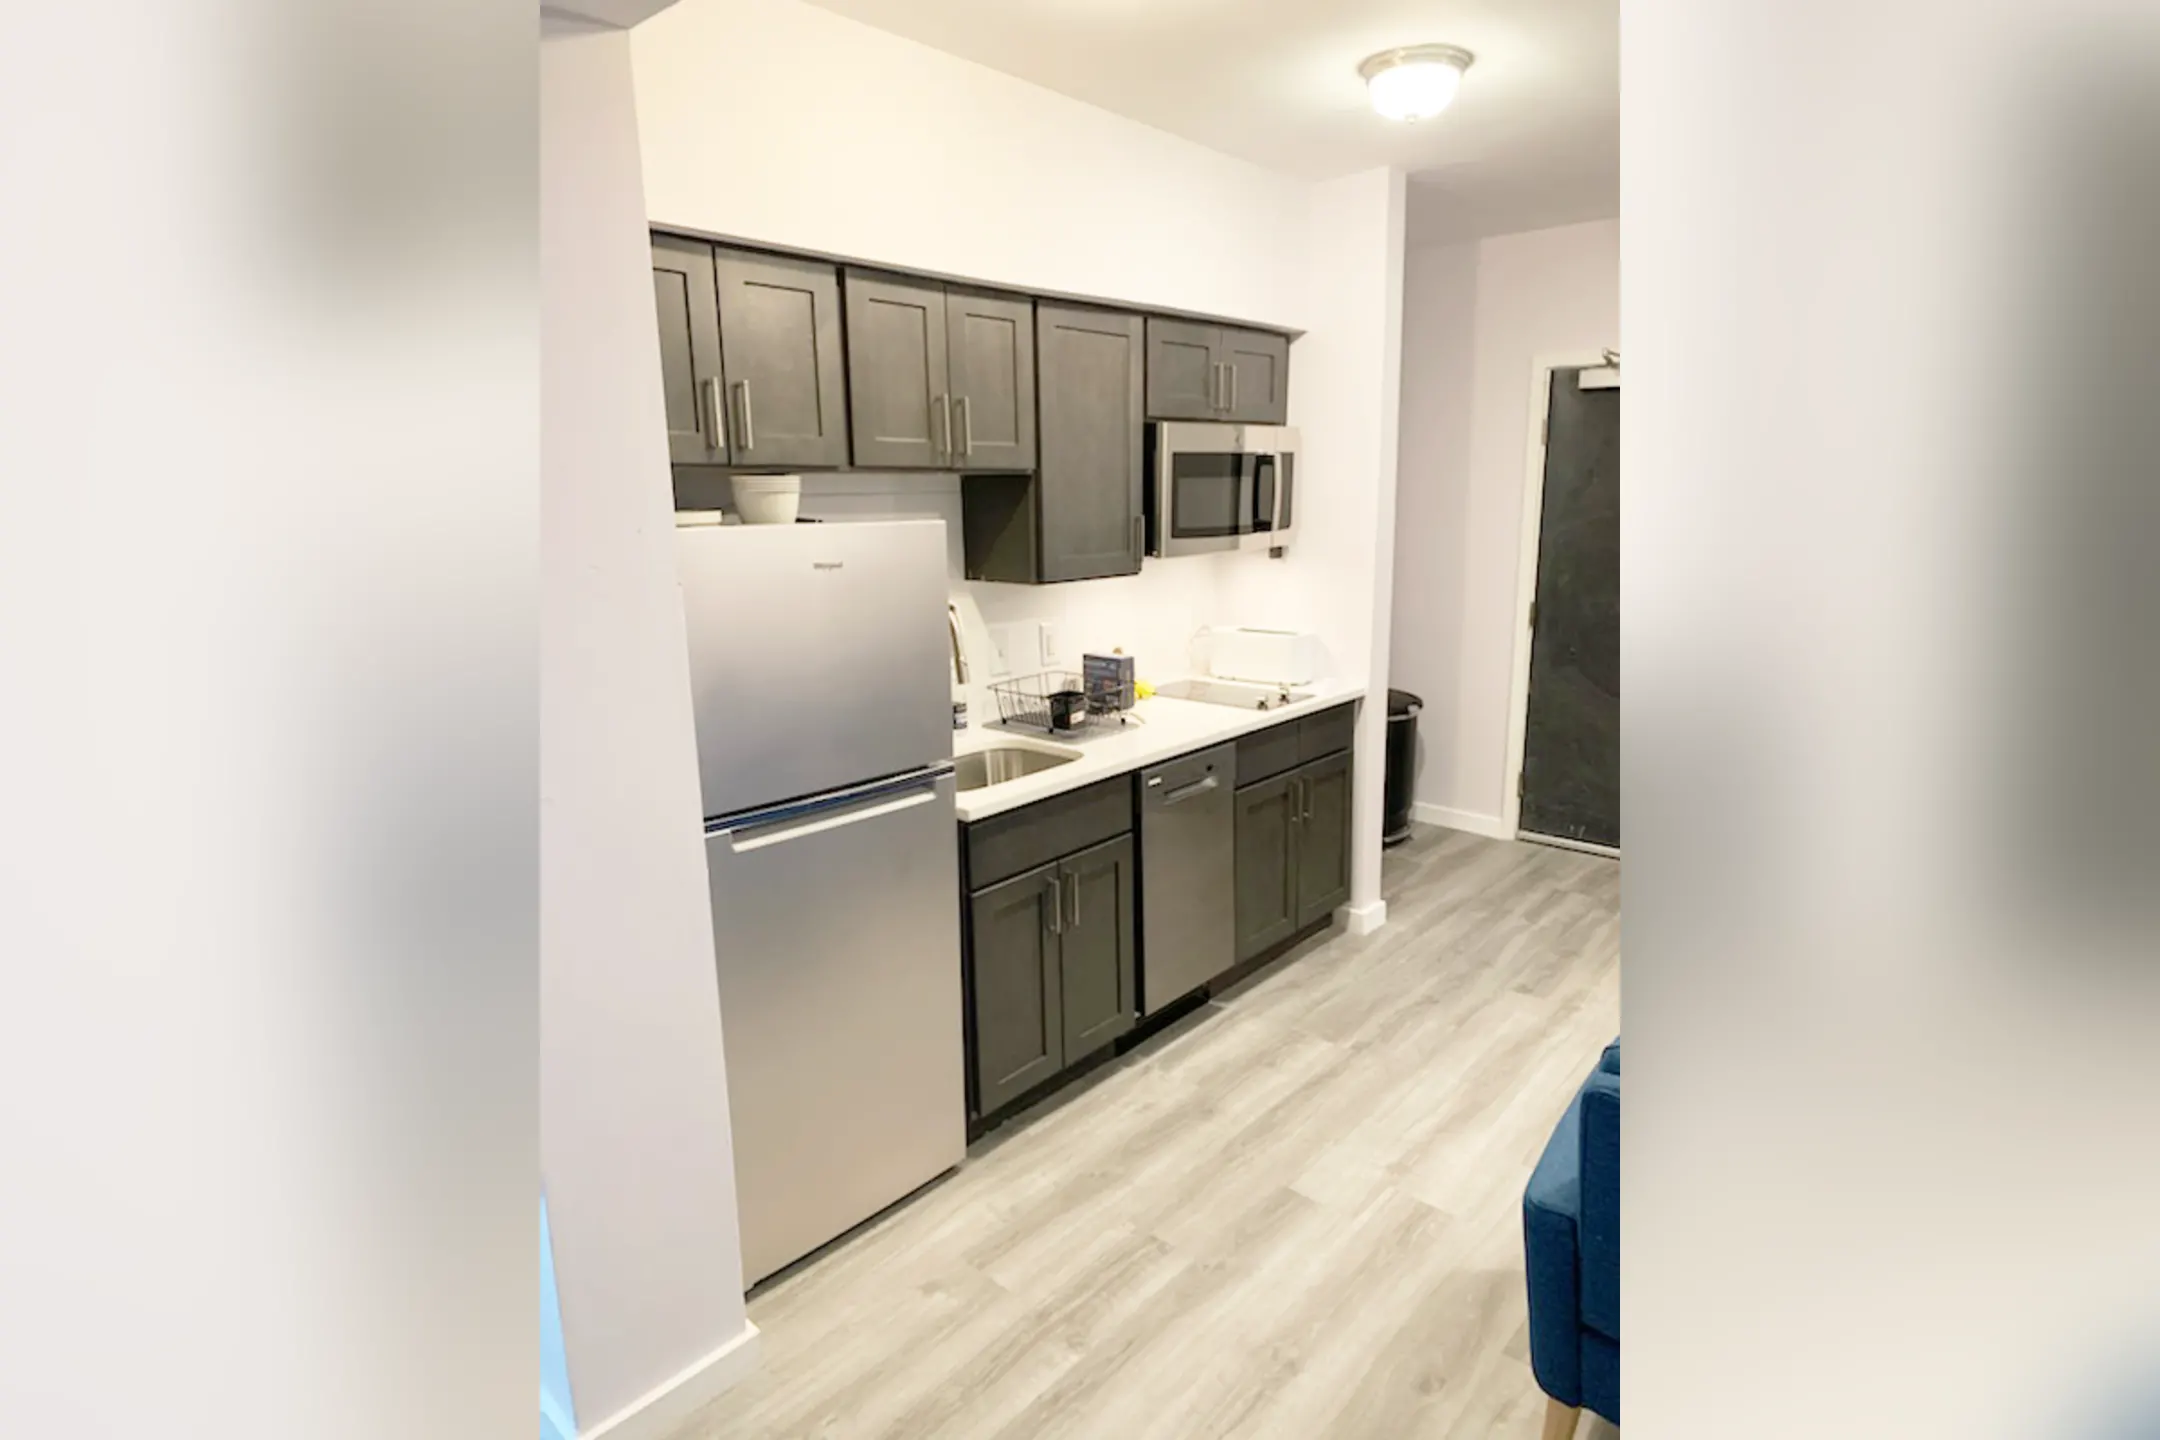 Kitchen - Skyline Apartments - Student Housing - Philadelphia, PA